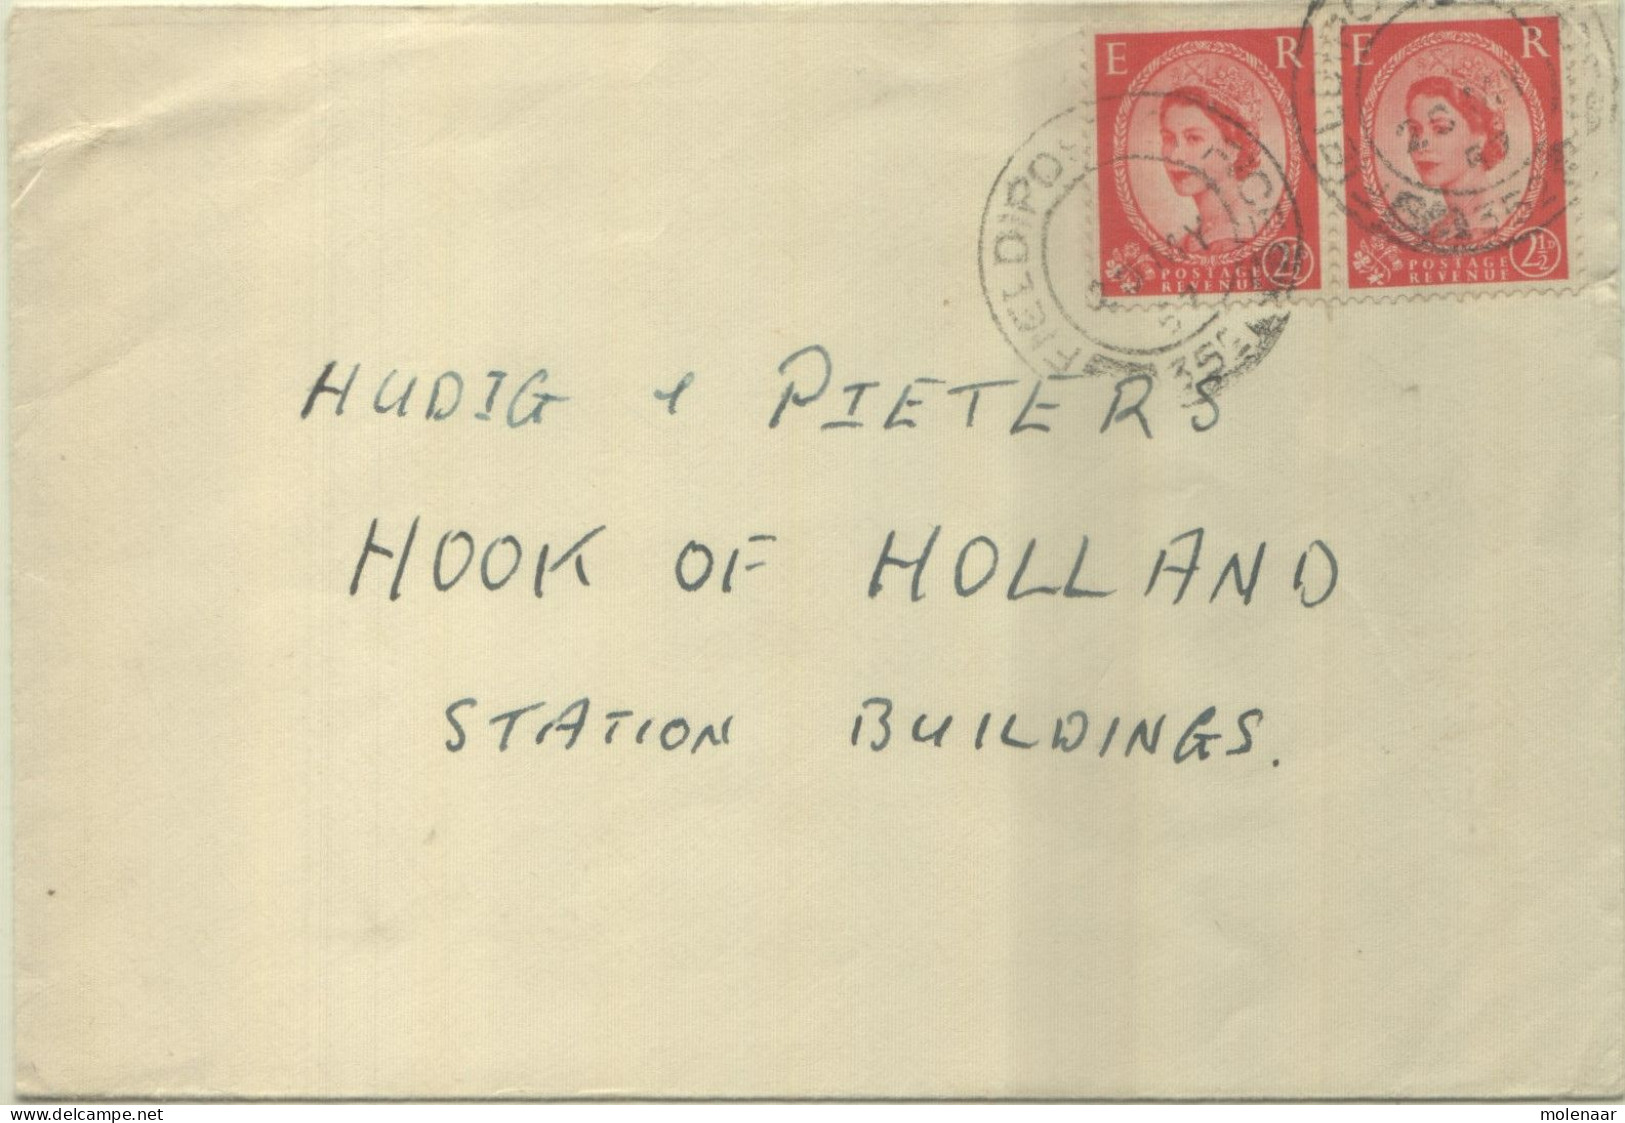 Postzegels > Europa > Groot-Brittannië > 1952-2022 Elizabeth II > 1971-1980  > Brief Met 2 Postzegels (16818) - Lettres & Documents